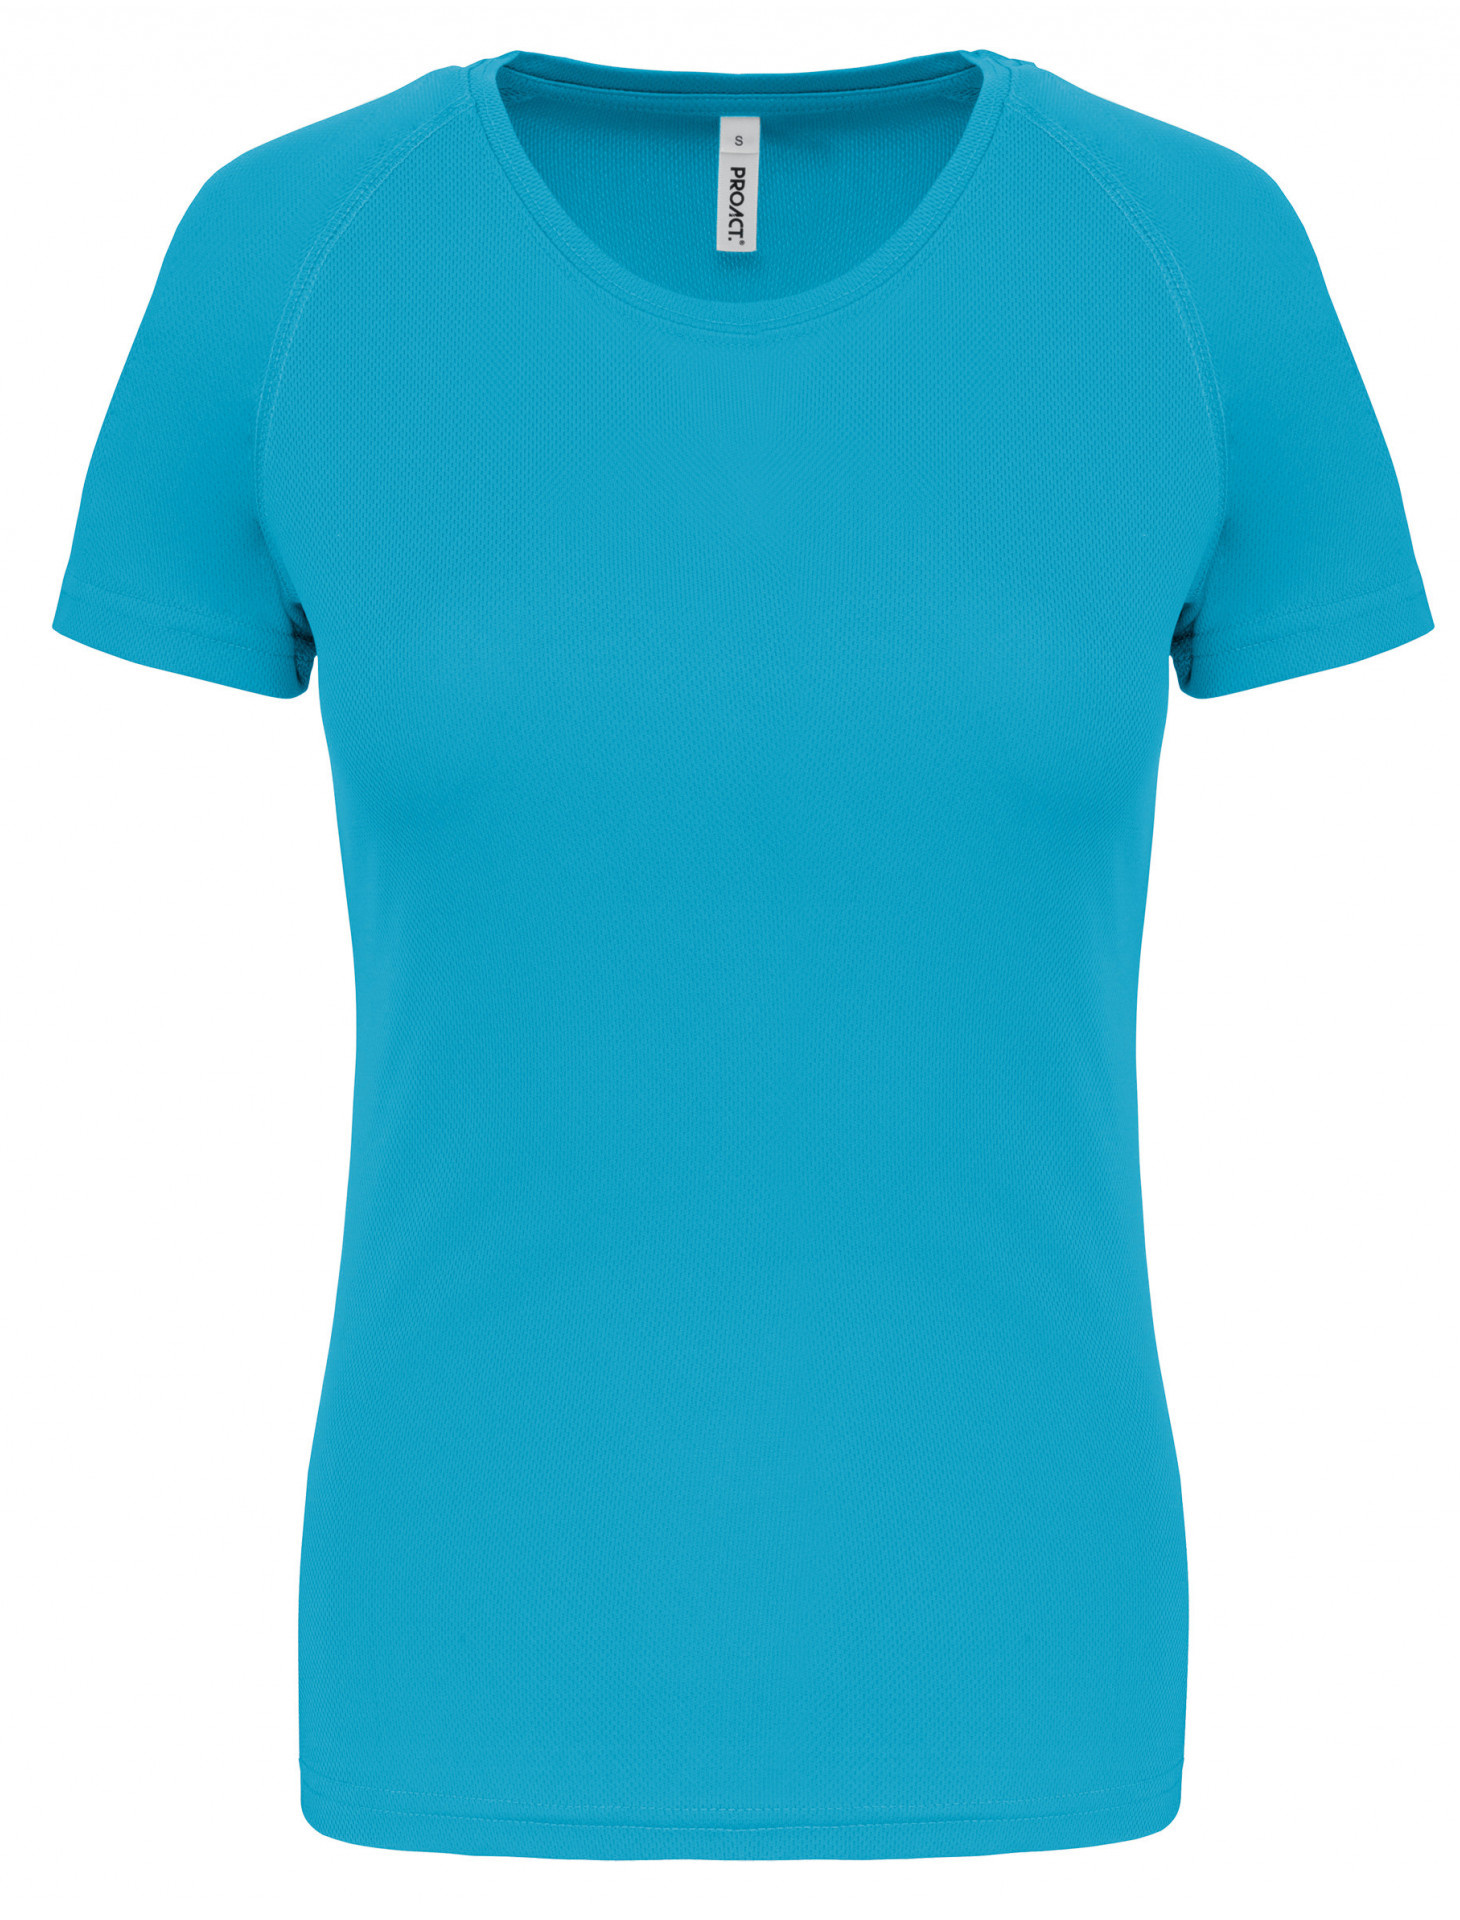 Moedig aan Raad vrijwilliger Tenuetje│Proact Sportshirt Basic Dames - Light Turquoise - Tenuetje.nl